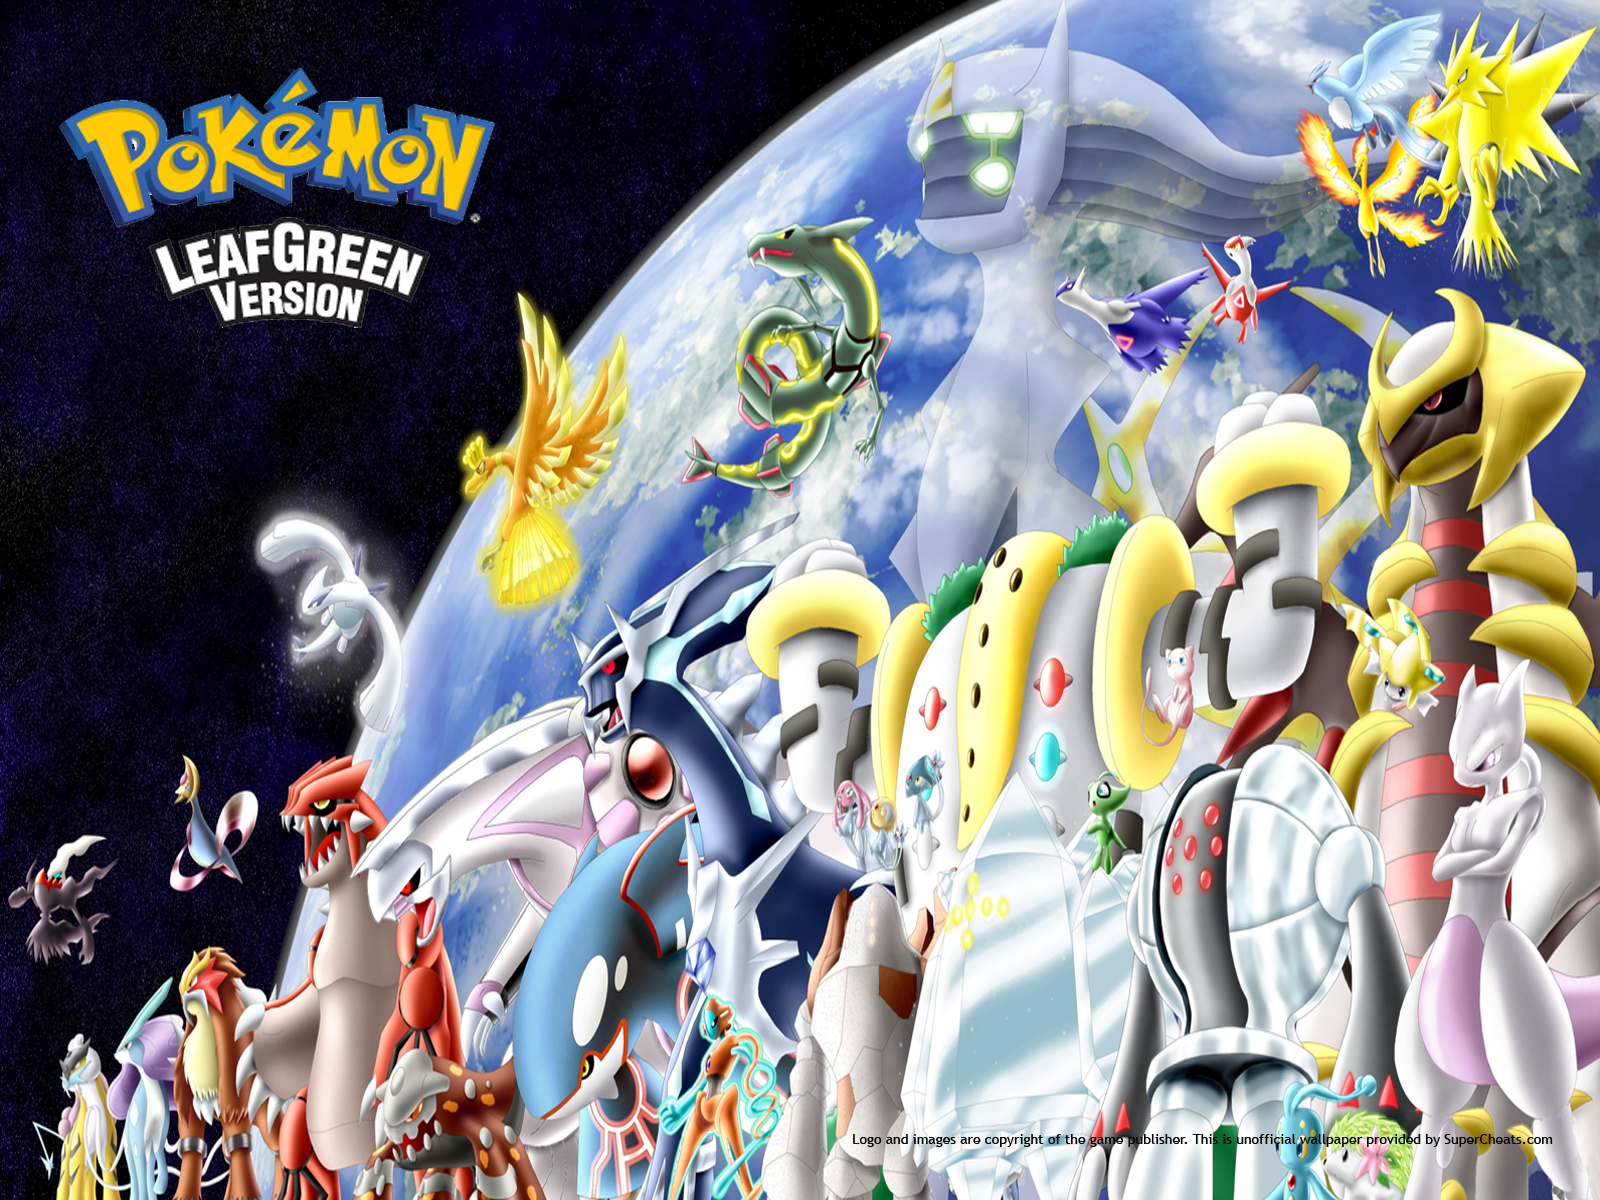 tutti i leggendari sfondi pokemon,cartone animato,cartone animato,anime,animazione,illustrazione